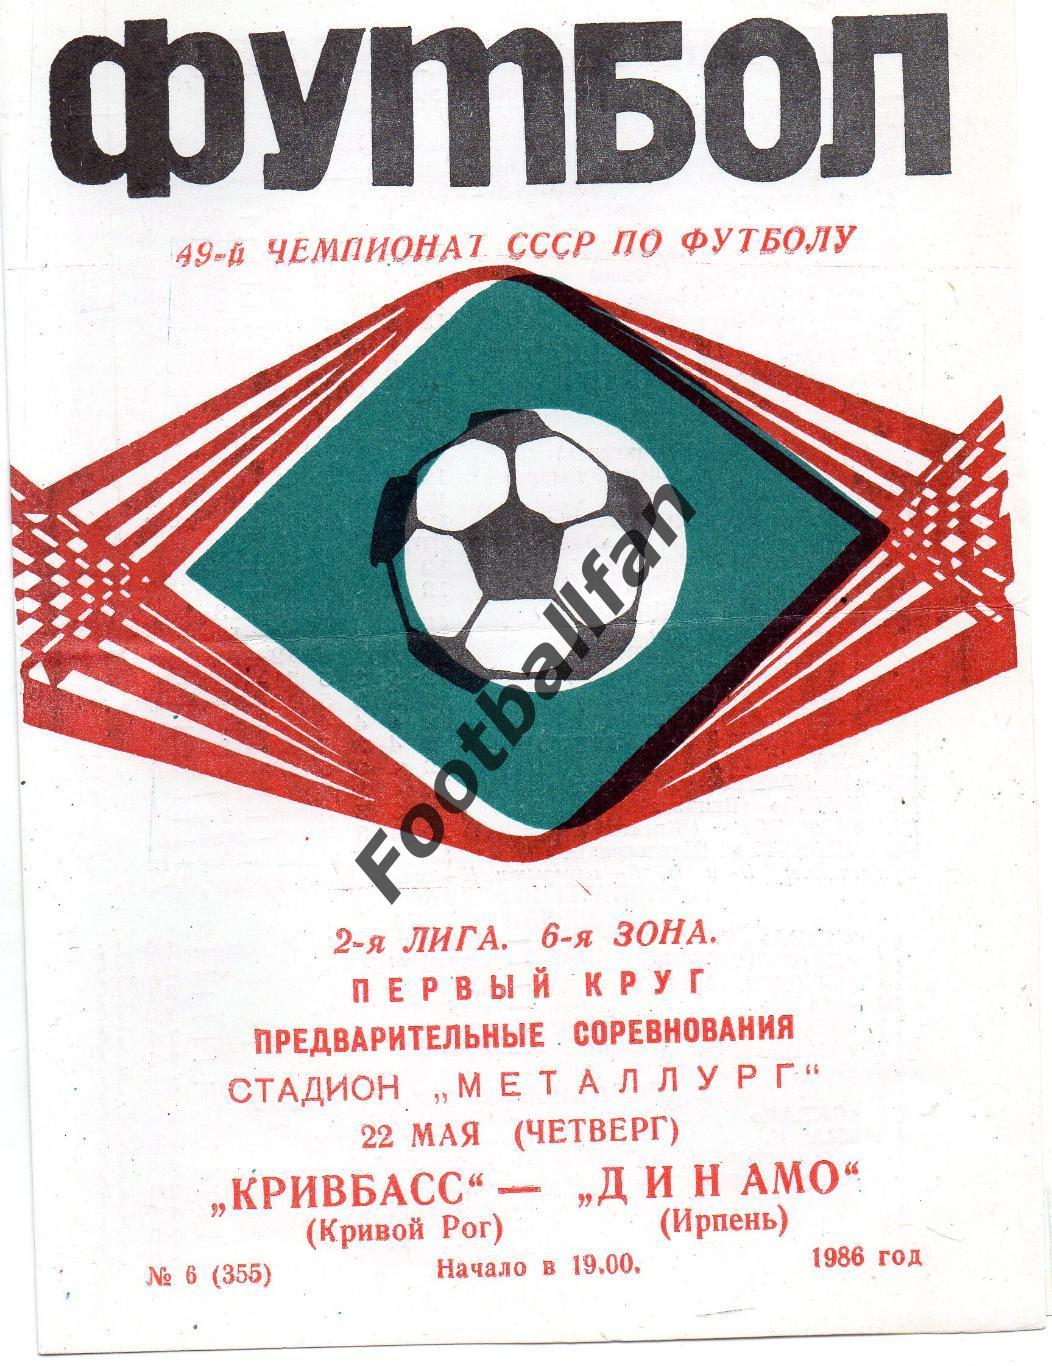 Кривбасс Кривой Рог - Динамо Ирпень 22.05.1986